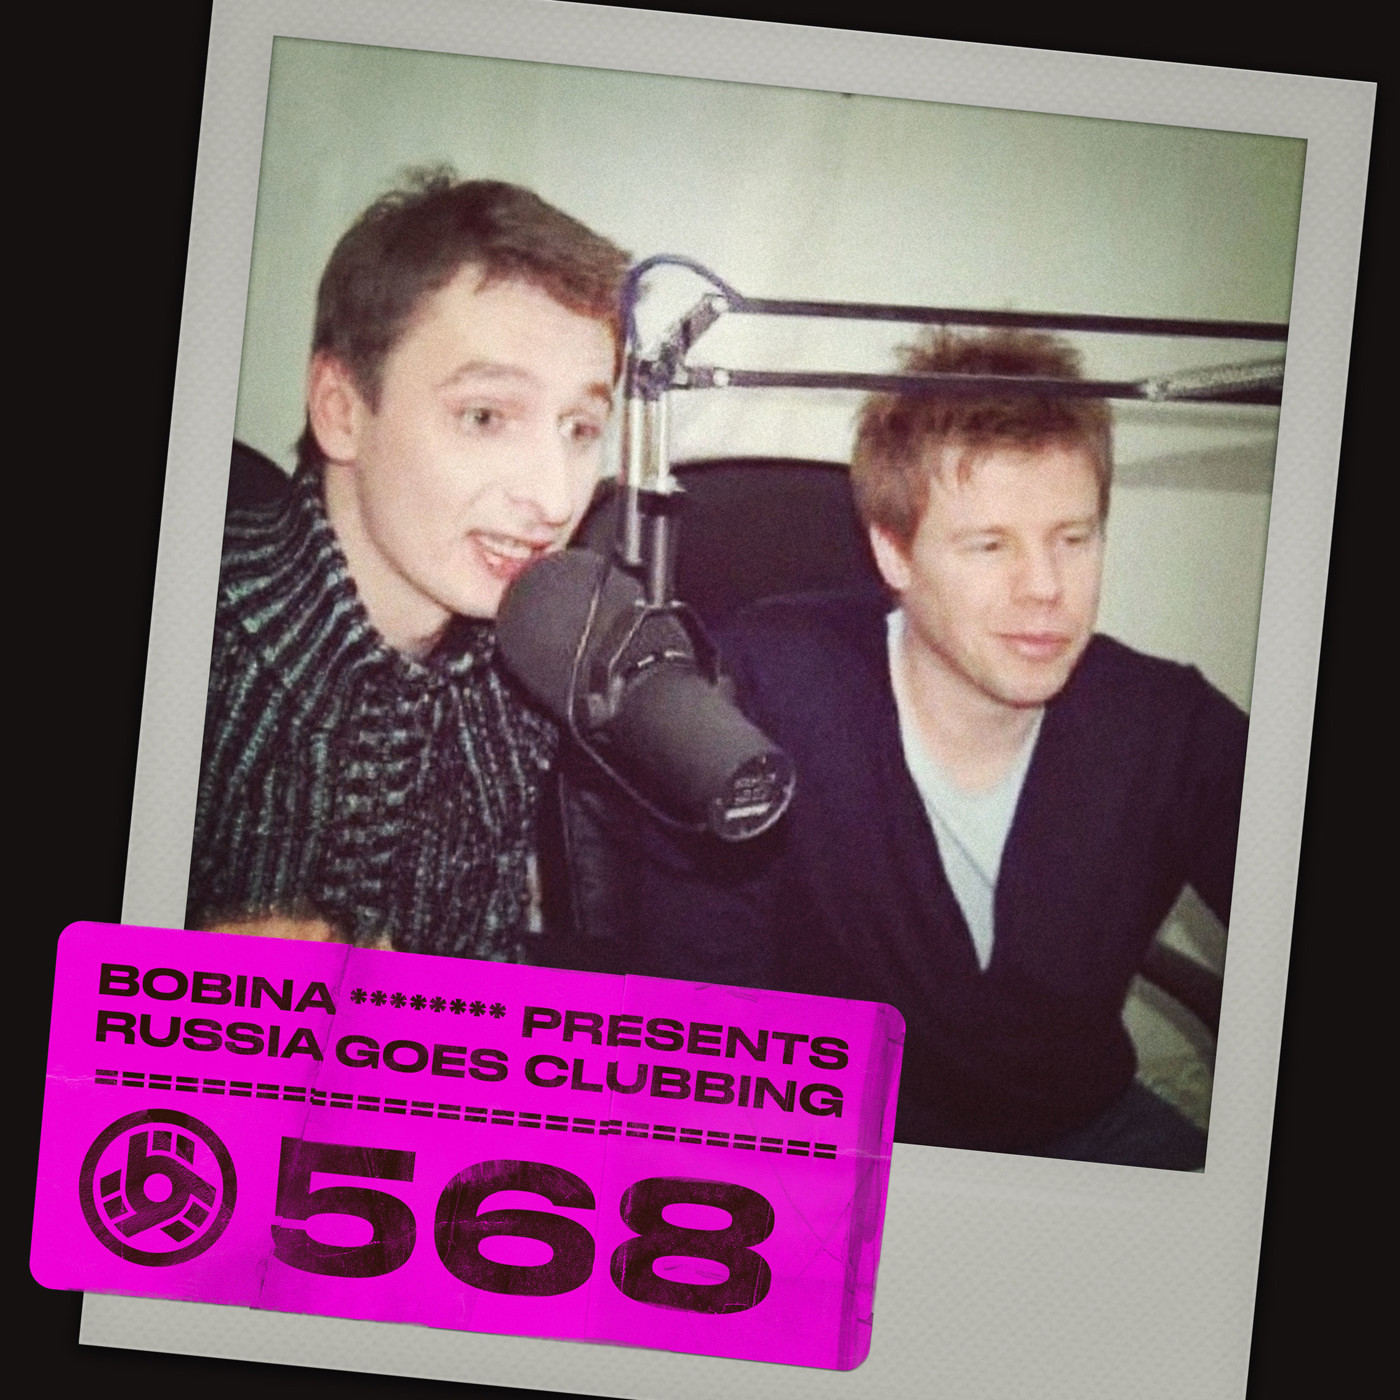 Bobina – Nr. 568 Russia Goes Clubbing #568